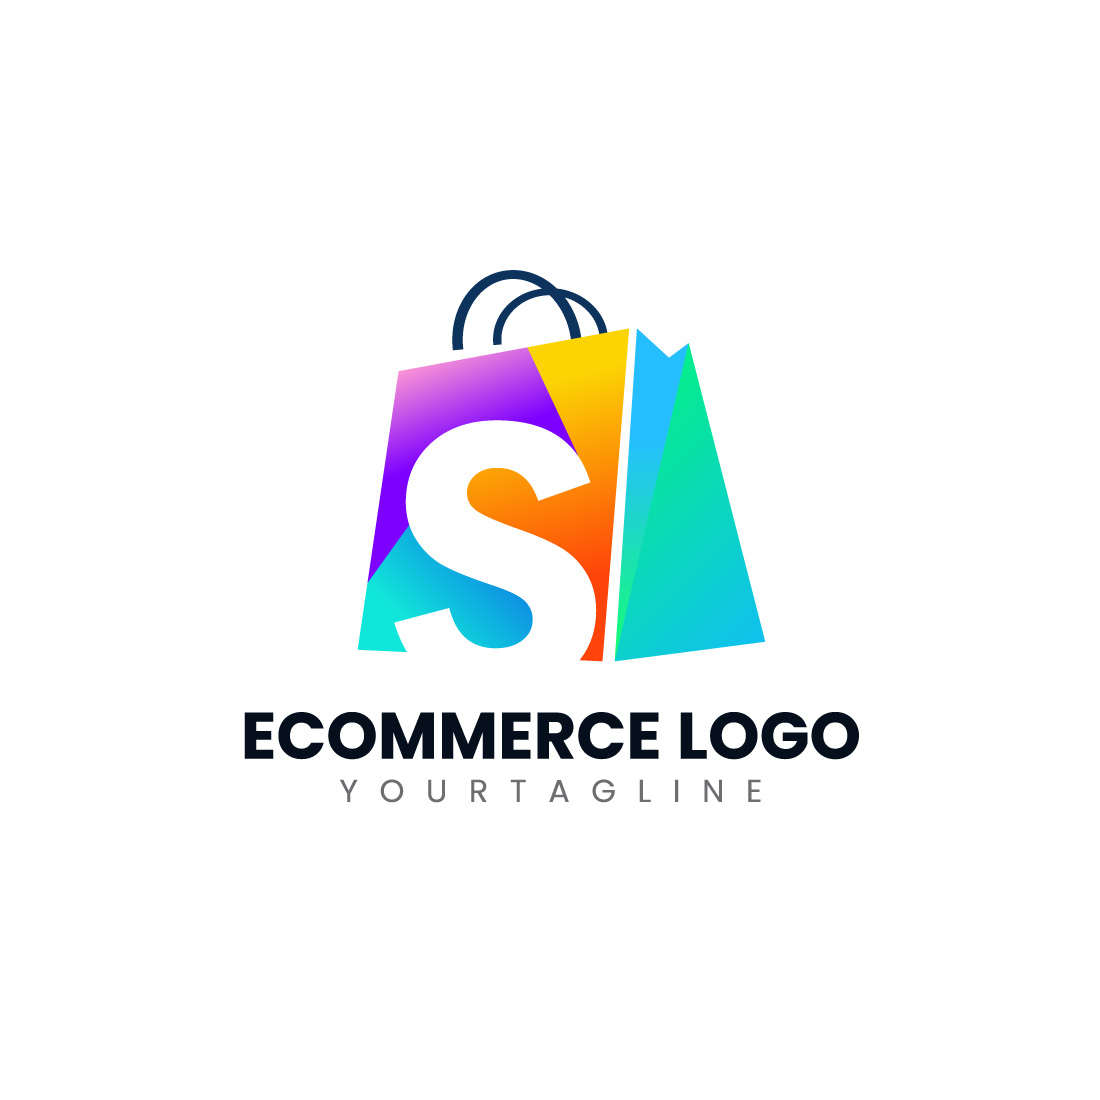 Ecommerce logo - Online Shopping - Shopify logo cover image.